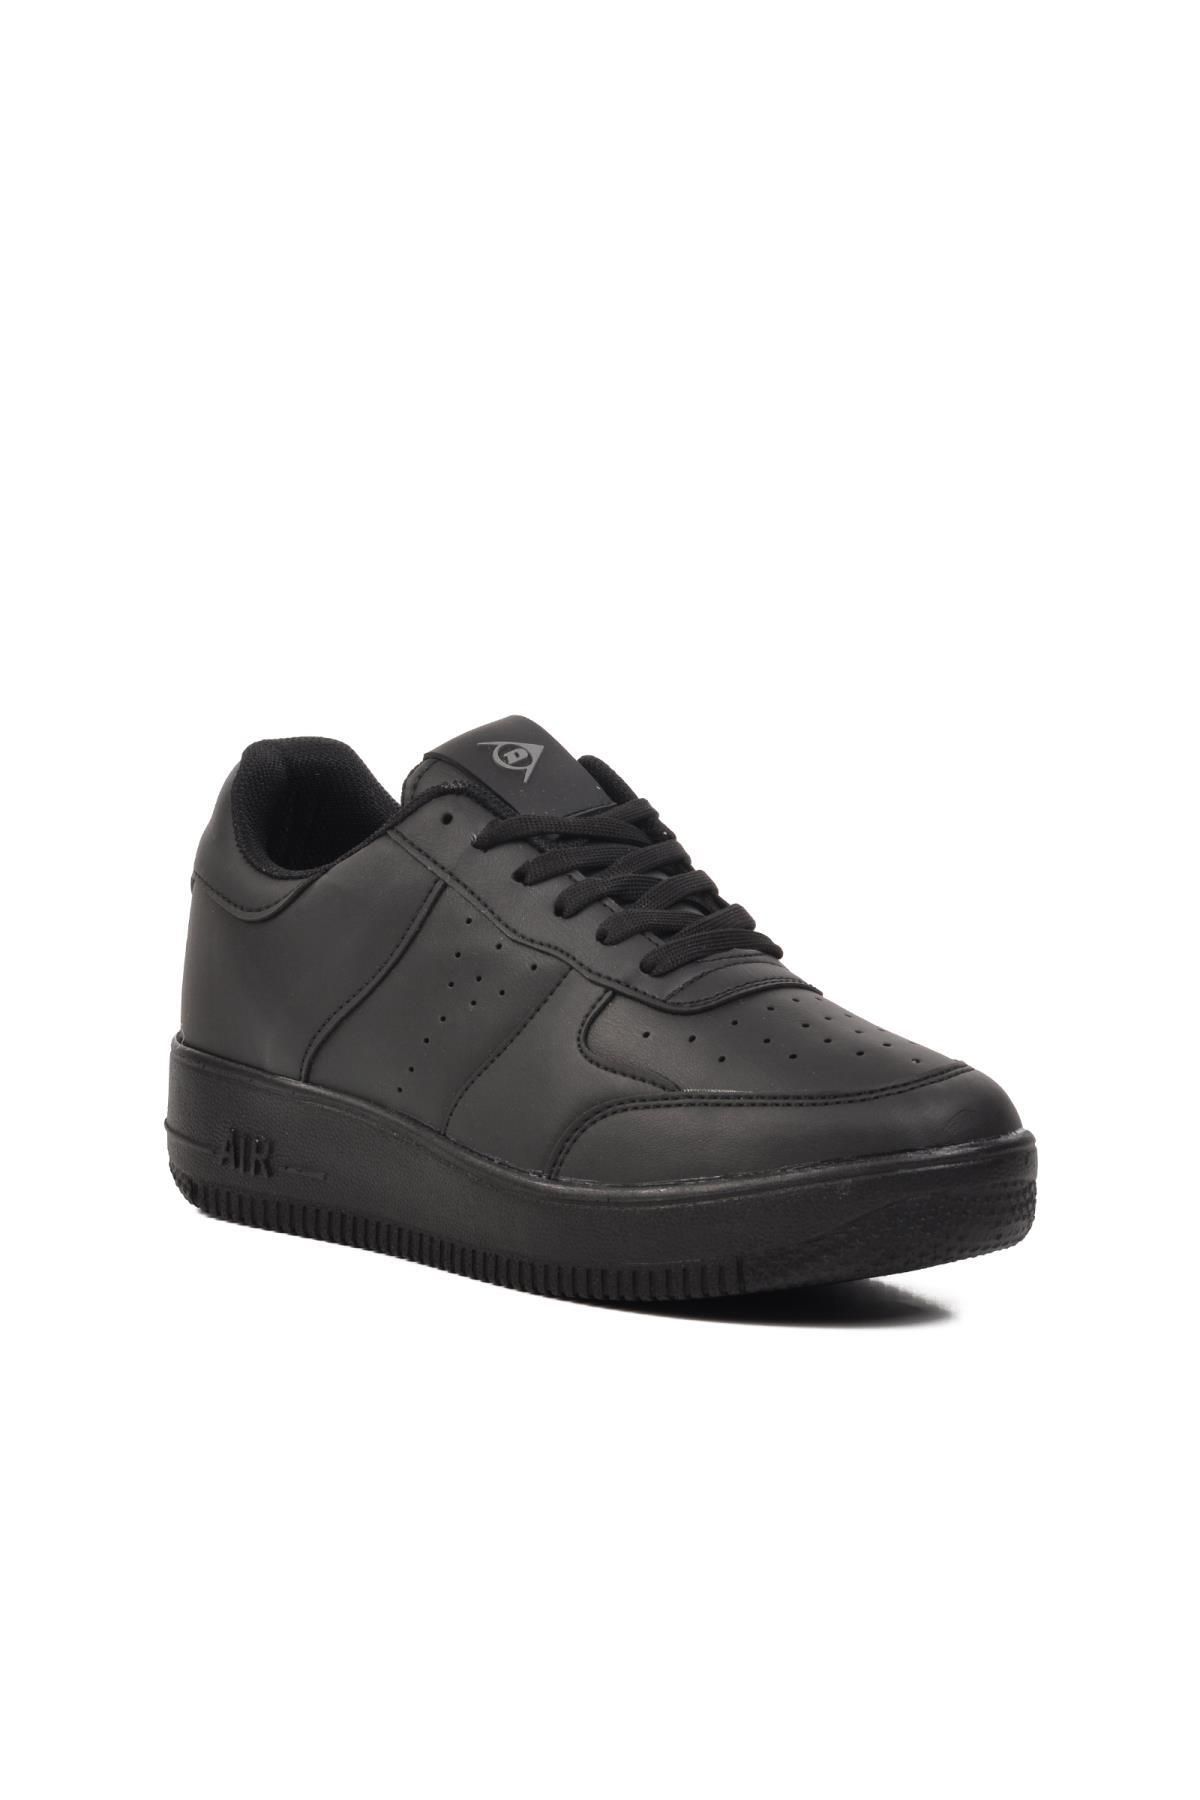 Dunlop Dnp-2383 Siyah Unisex Sneaker